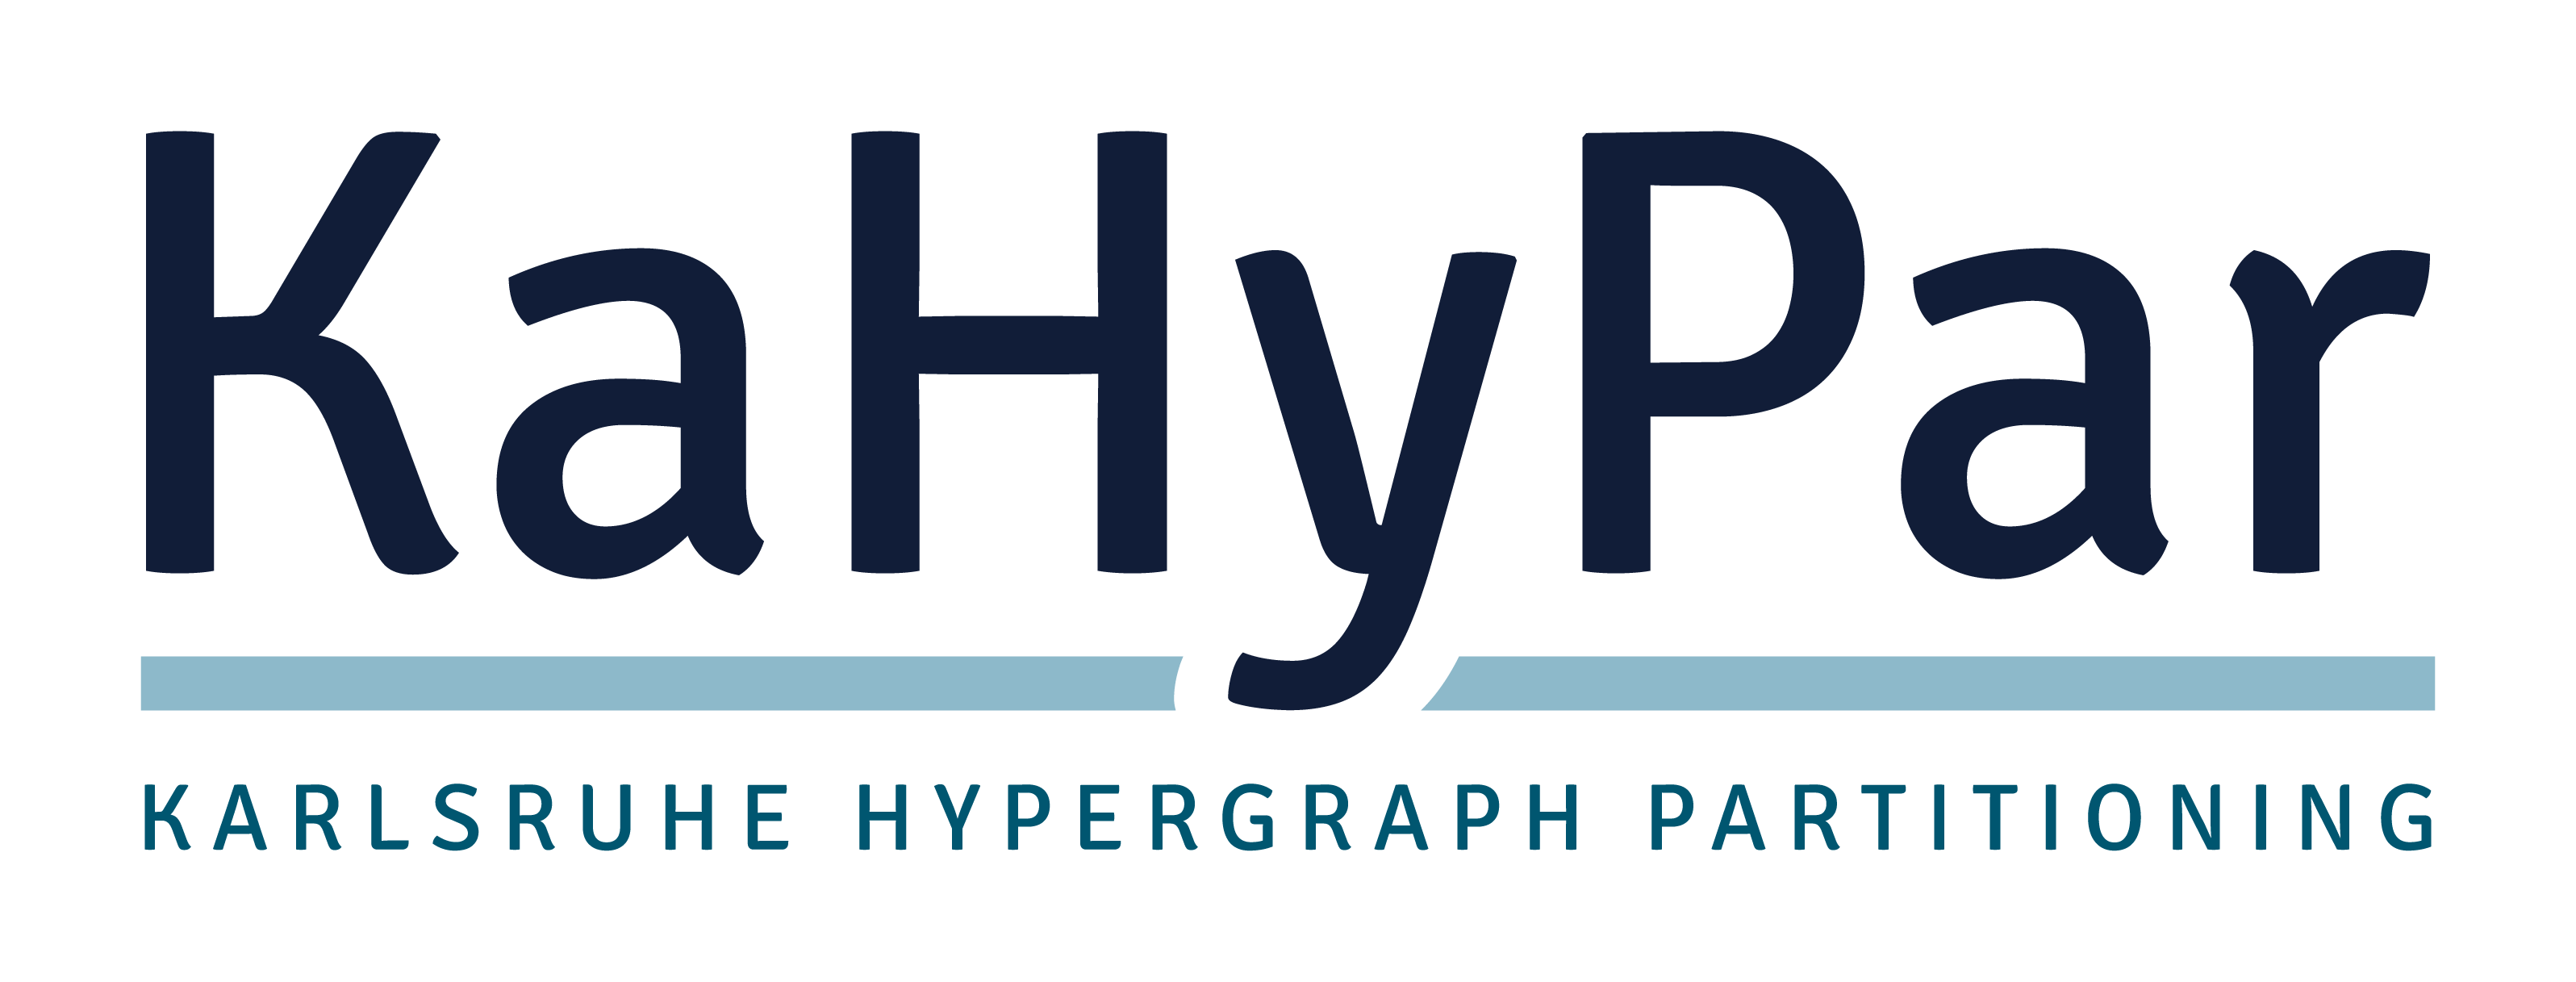 KaHyPar - Karlsruhe Hypergraph Partitioning